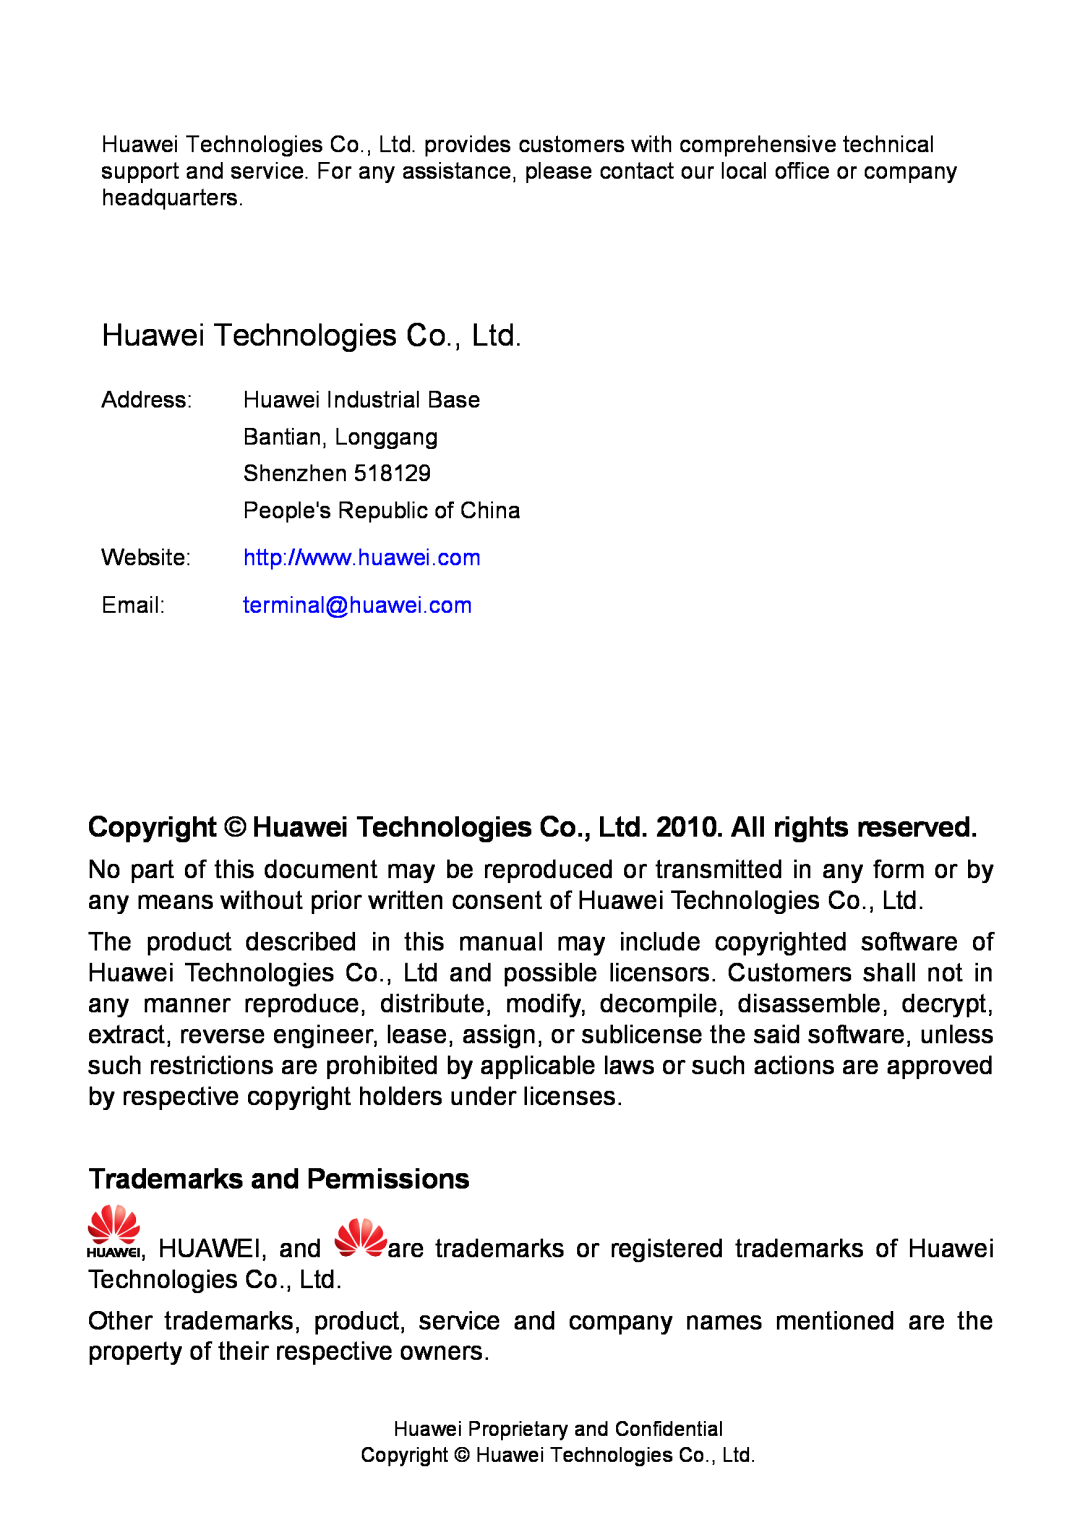 Huawei HG552a1 manual Trademarks and Permissions, Address, Huawei Industrial Base, Bantian, Longgang, Shenzhen, Website 